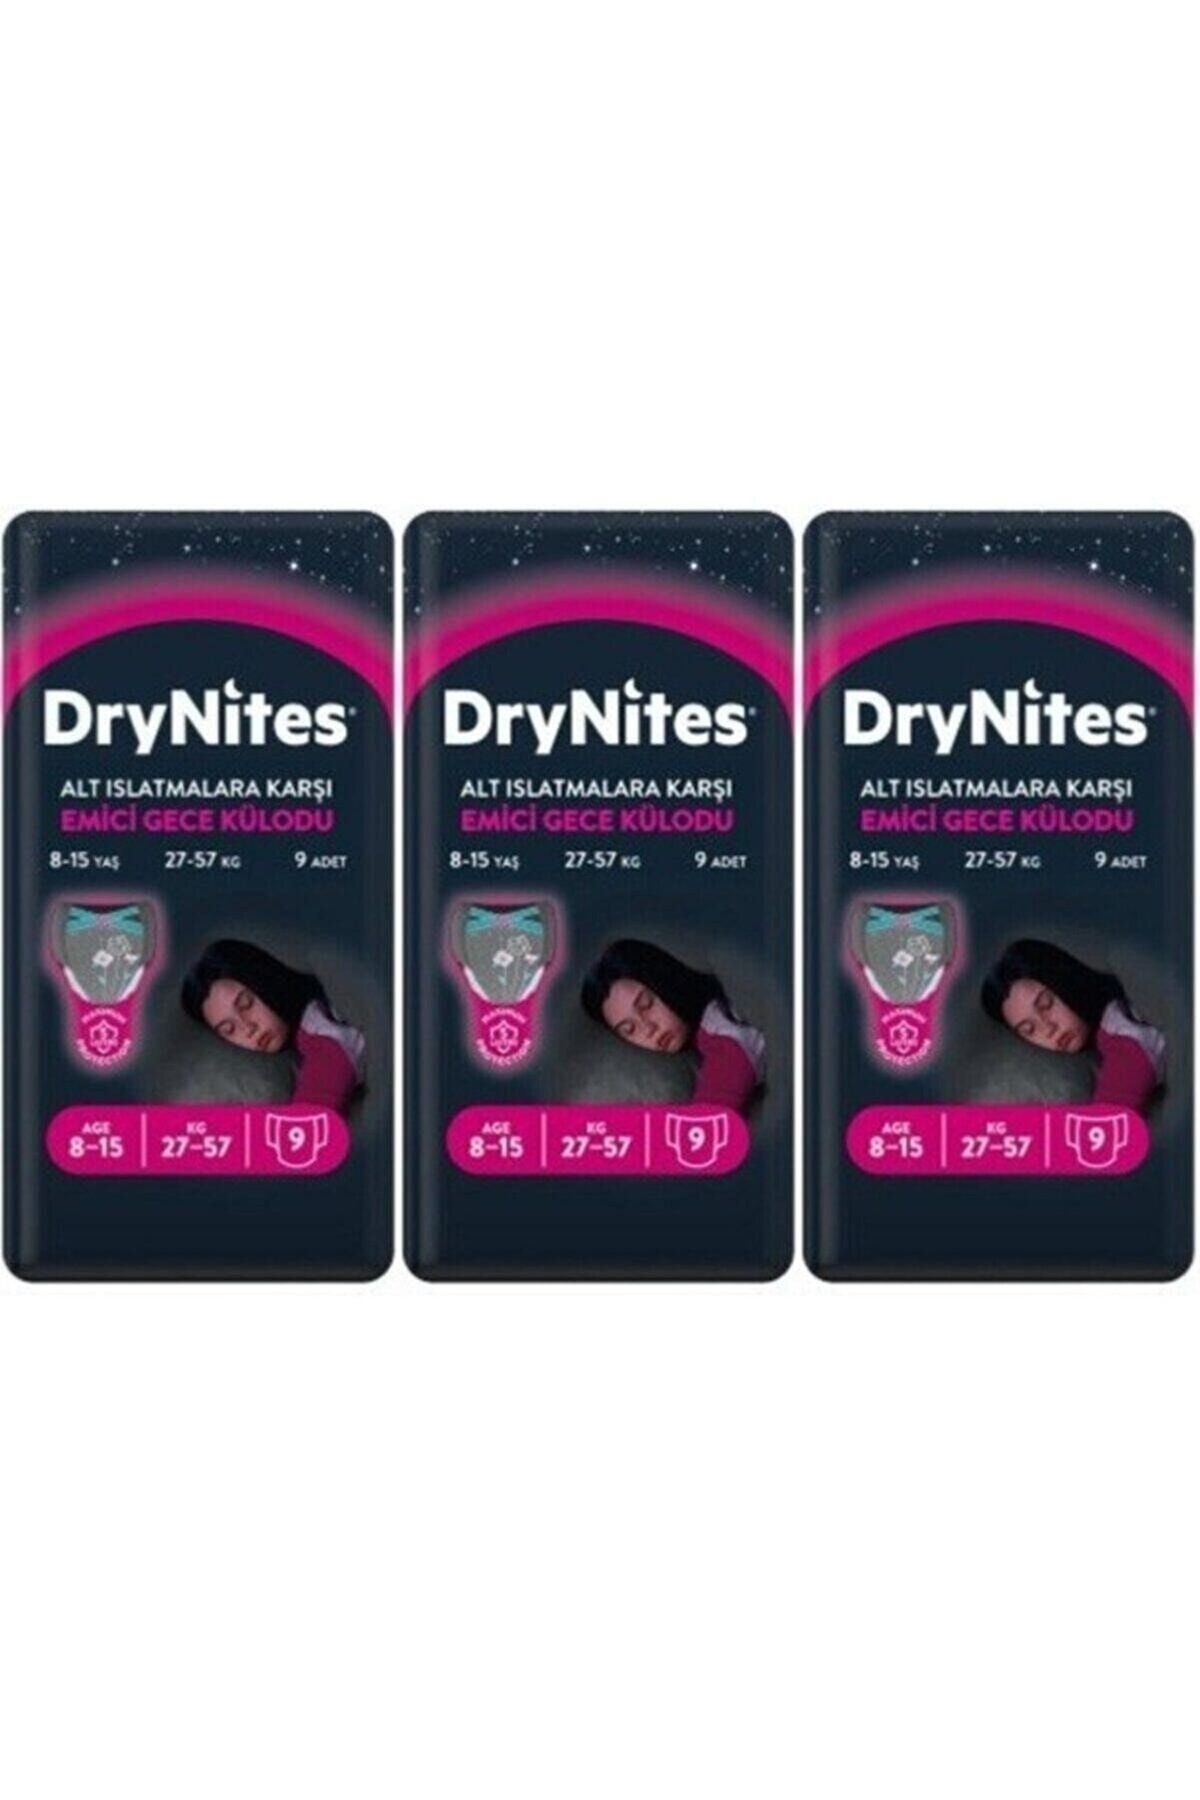 DryNites Kız Emici Gece Külodu 8-15 Yaş 9'lu X 3 Paket 27 Adet